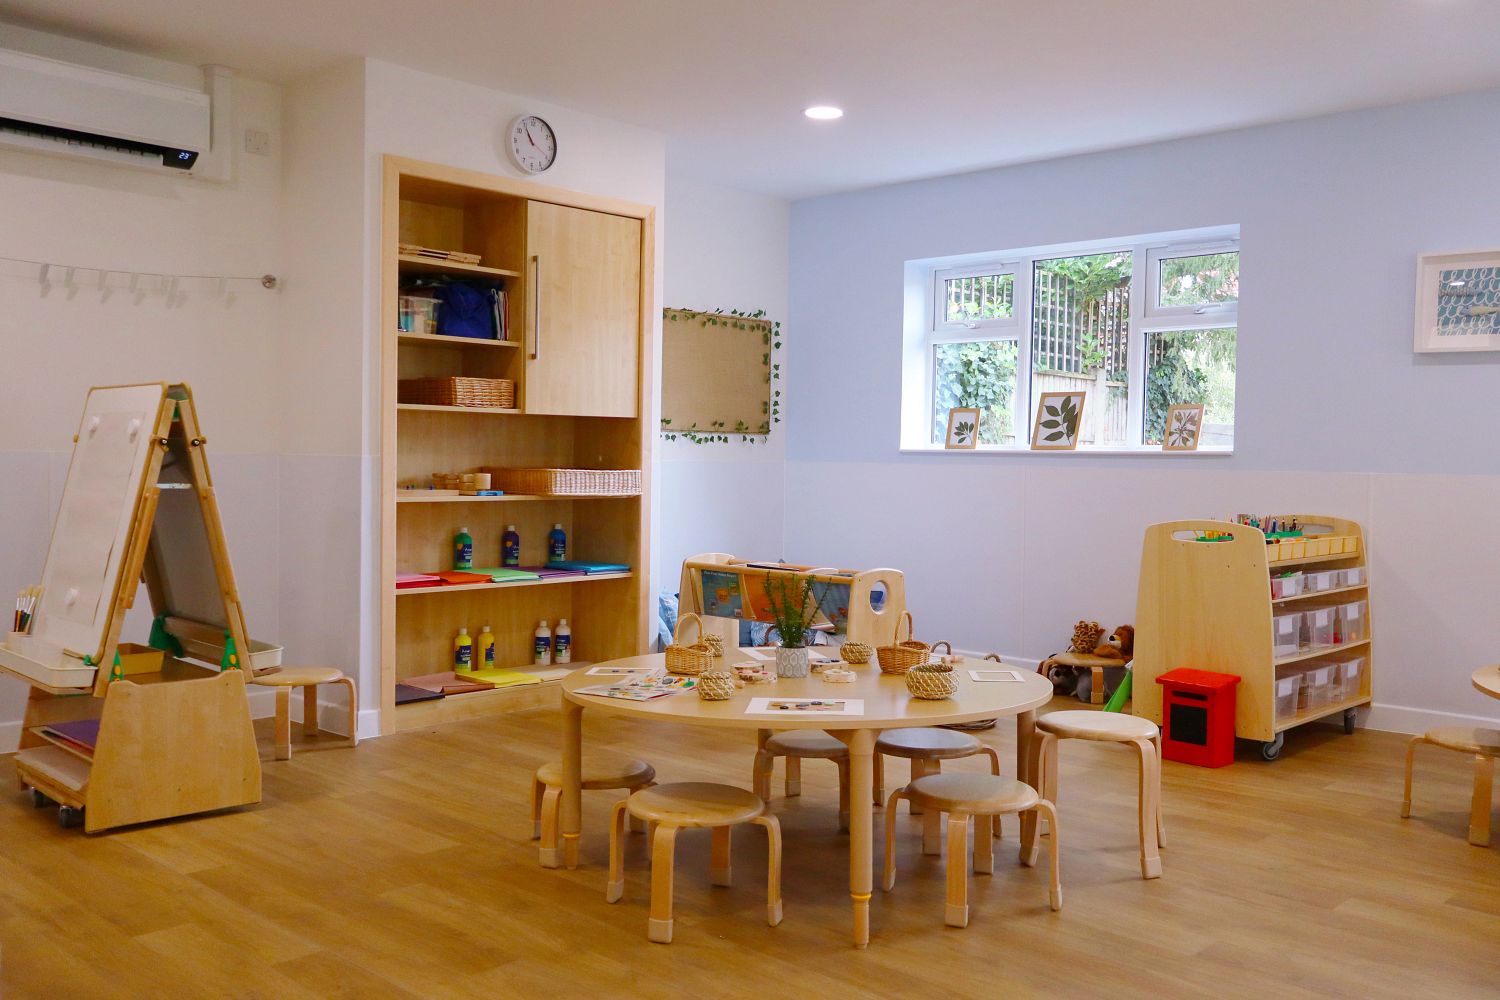 Cedar House Day Nursery and preschool